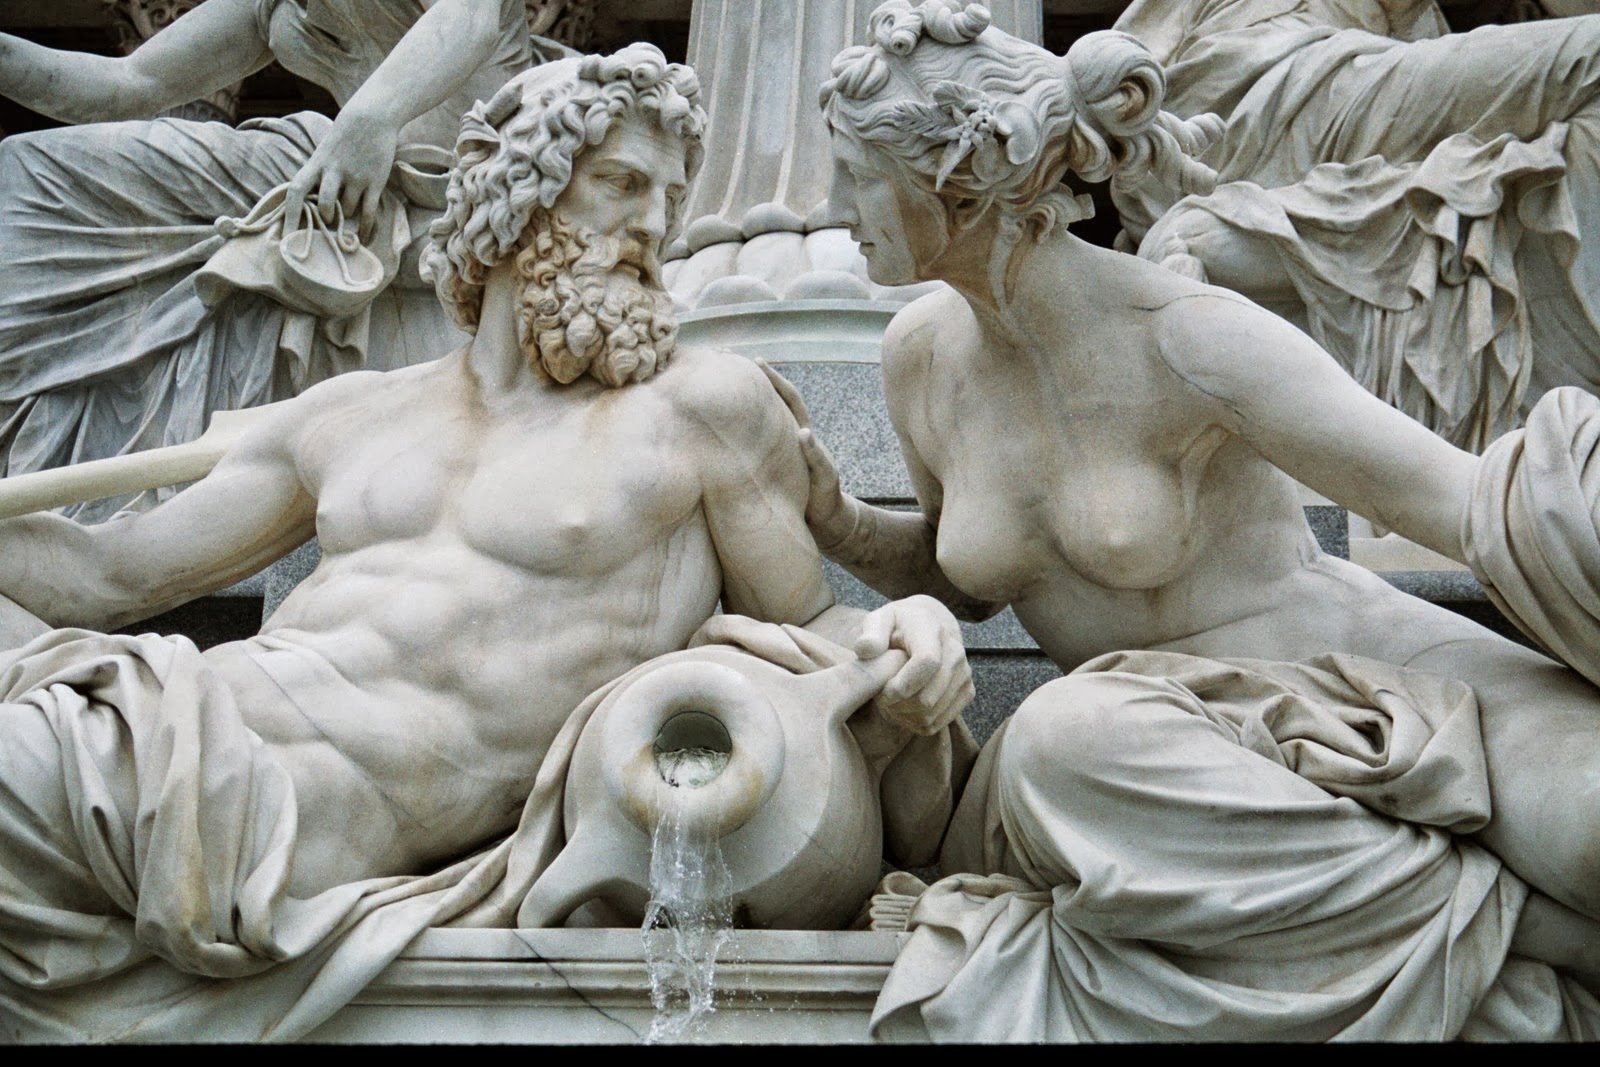 Zeus and his lover sculpture